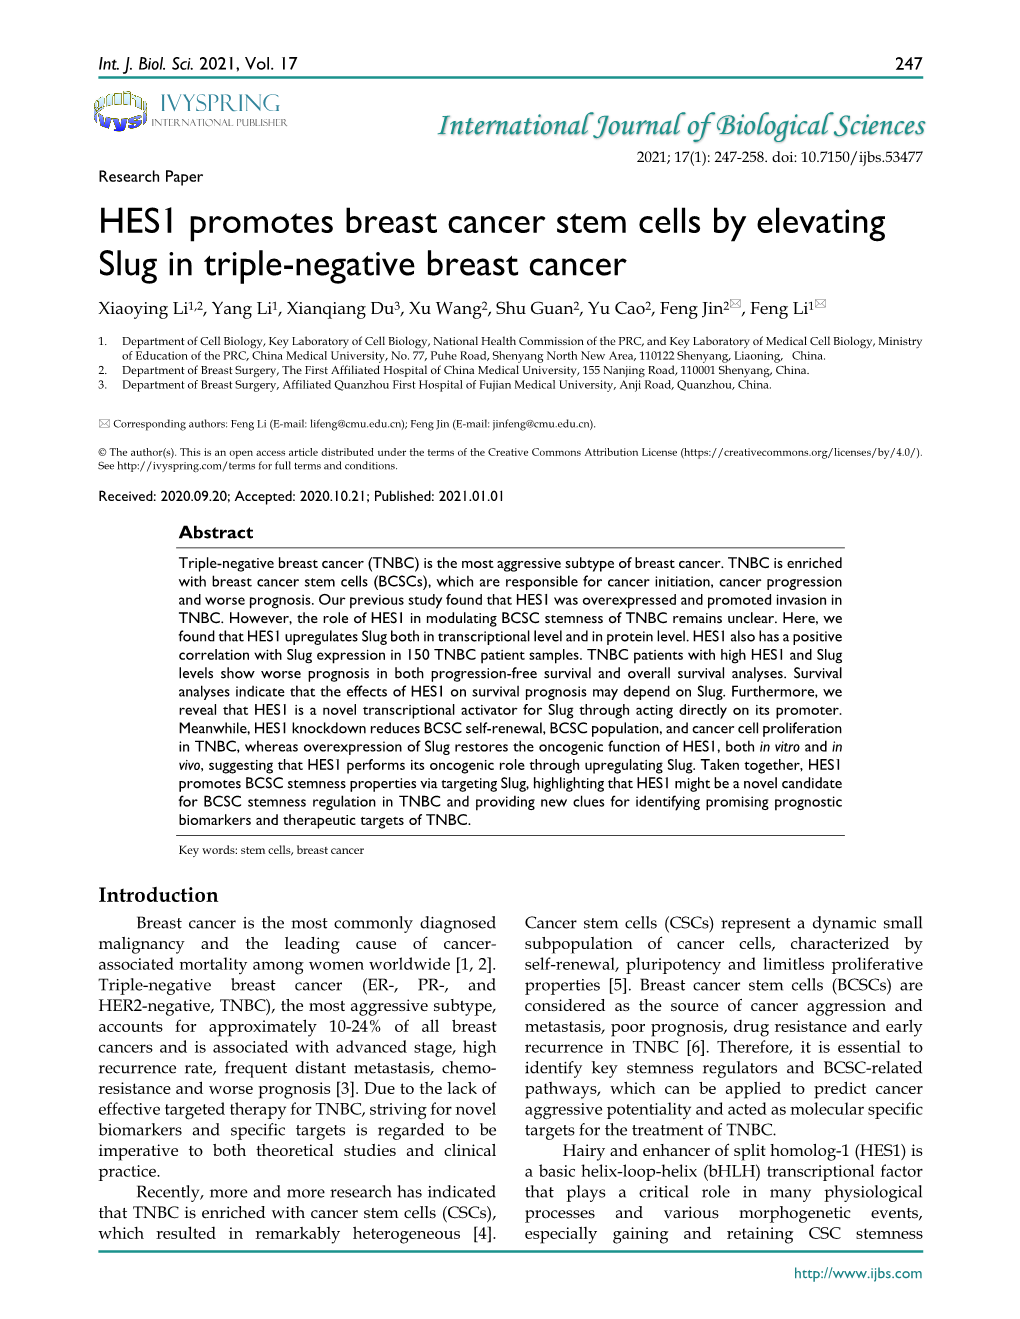 HES1 Promotes Breast Cancer Stem Cells by Elevating Slug in Triple